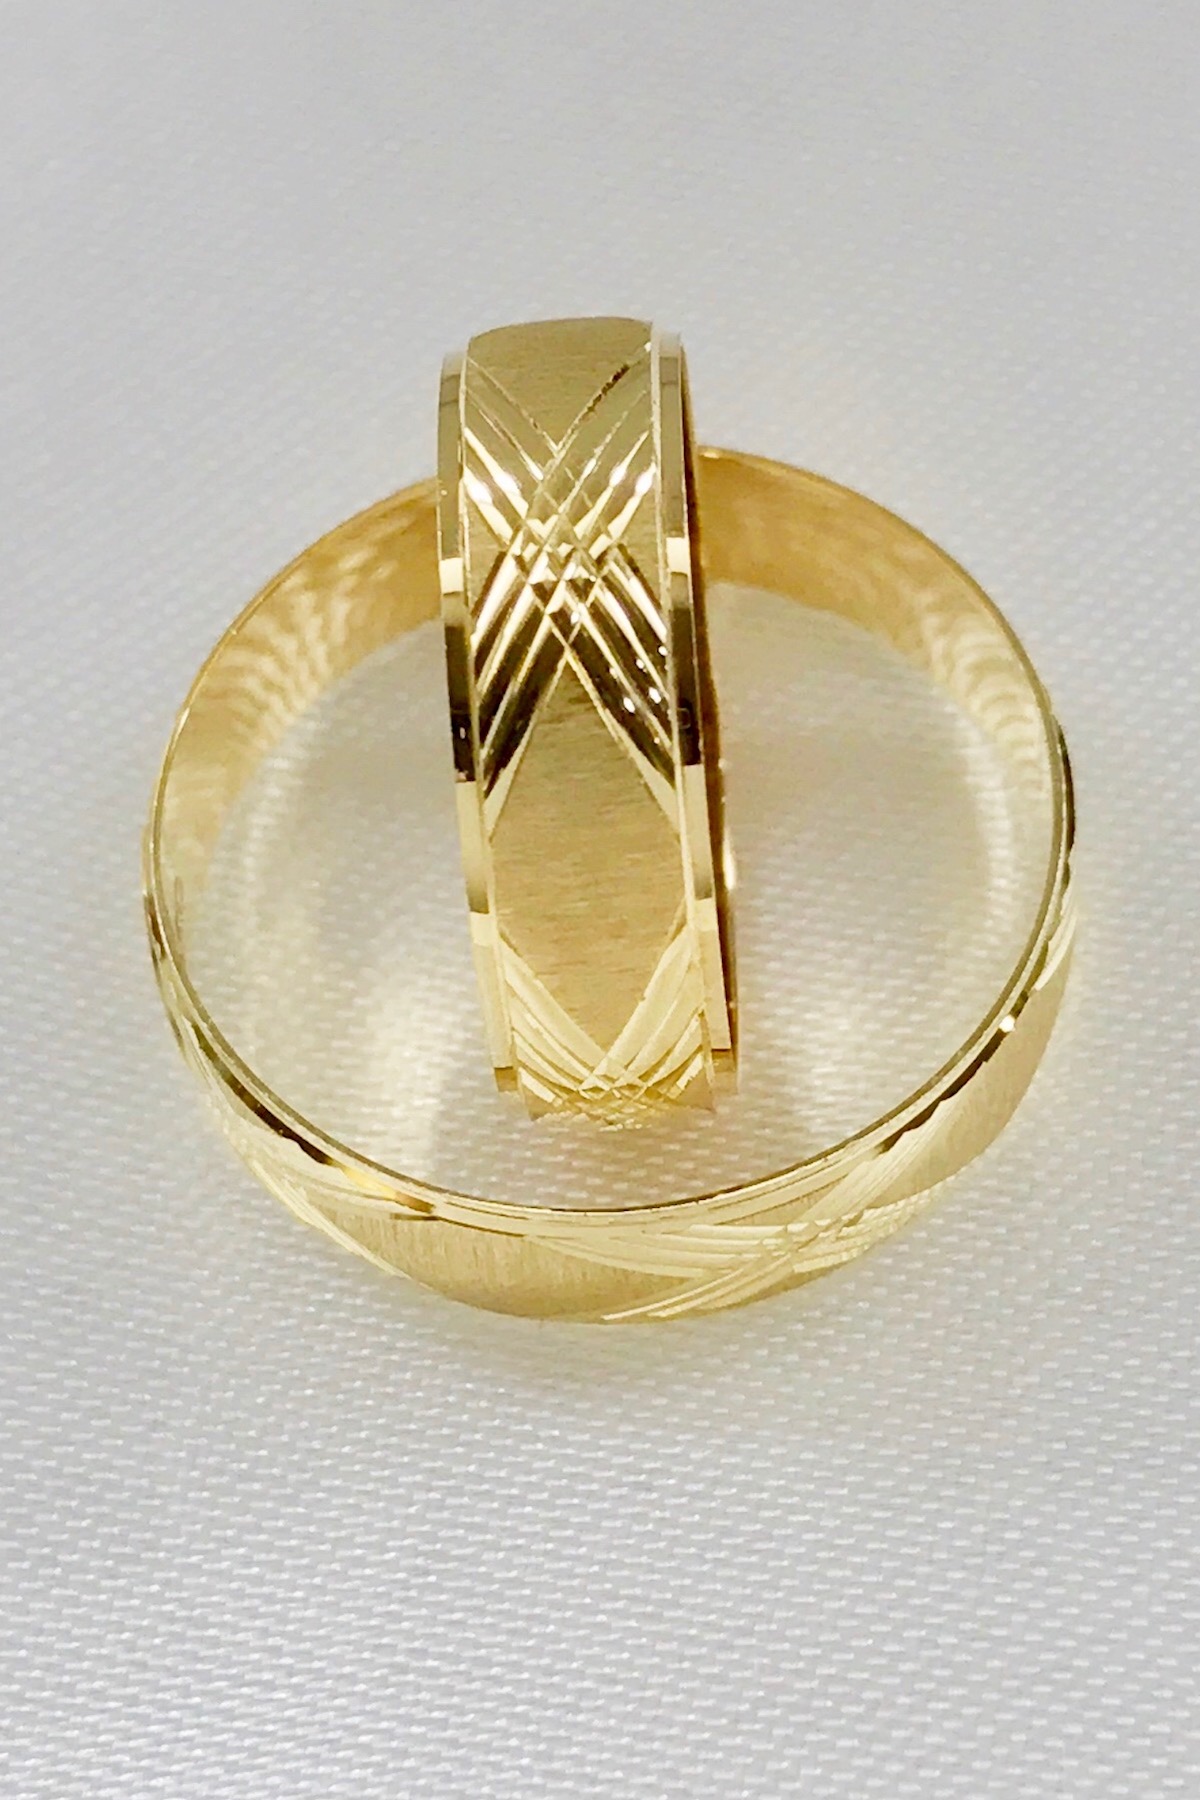 18K White Gold Wedding Ring Price Philippines ~ weardesigns